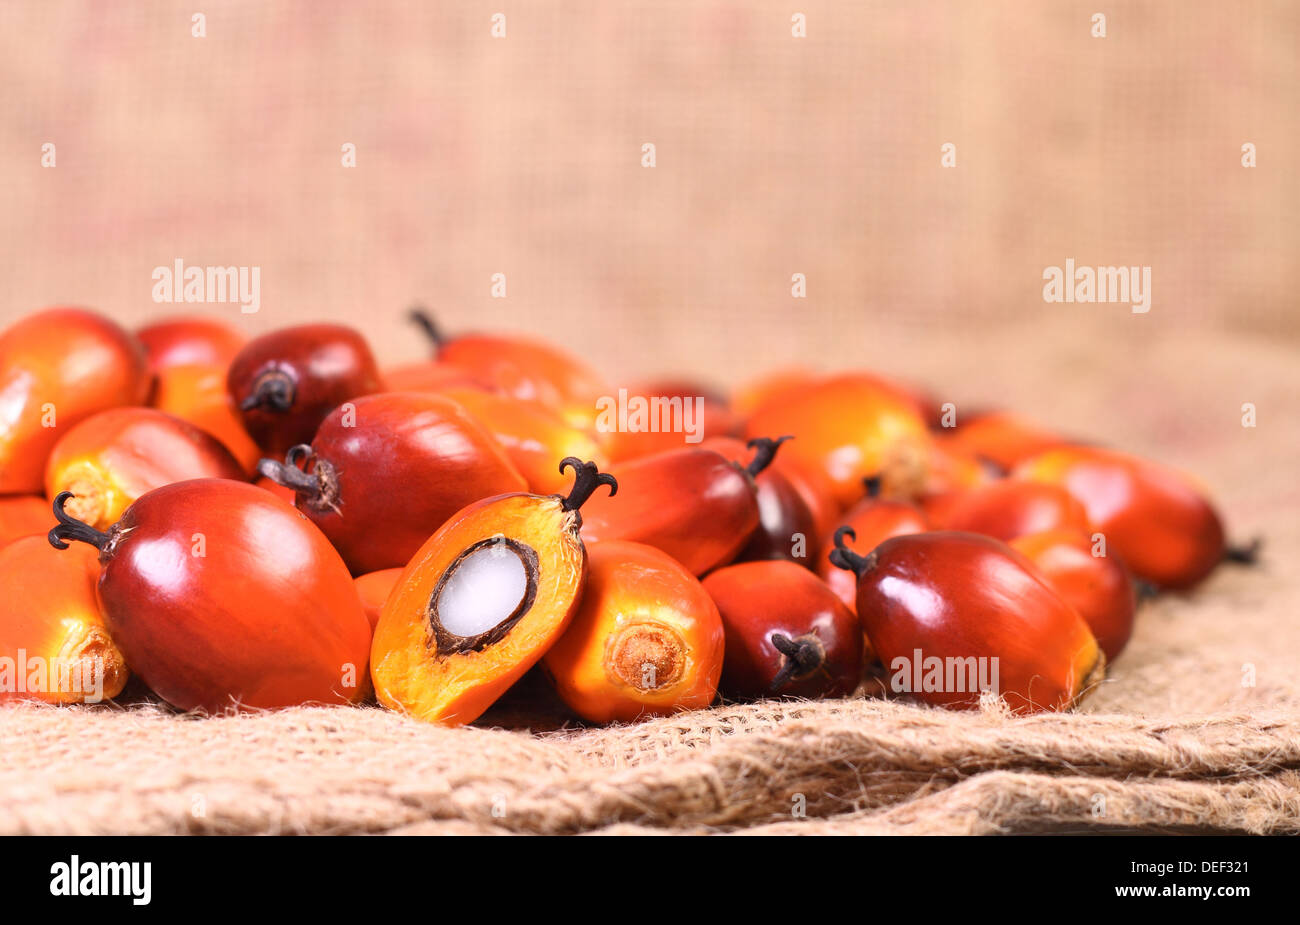 Un grupo de frutos de palma de aceite en la bolsa bolso Foto de stock